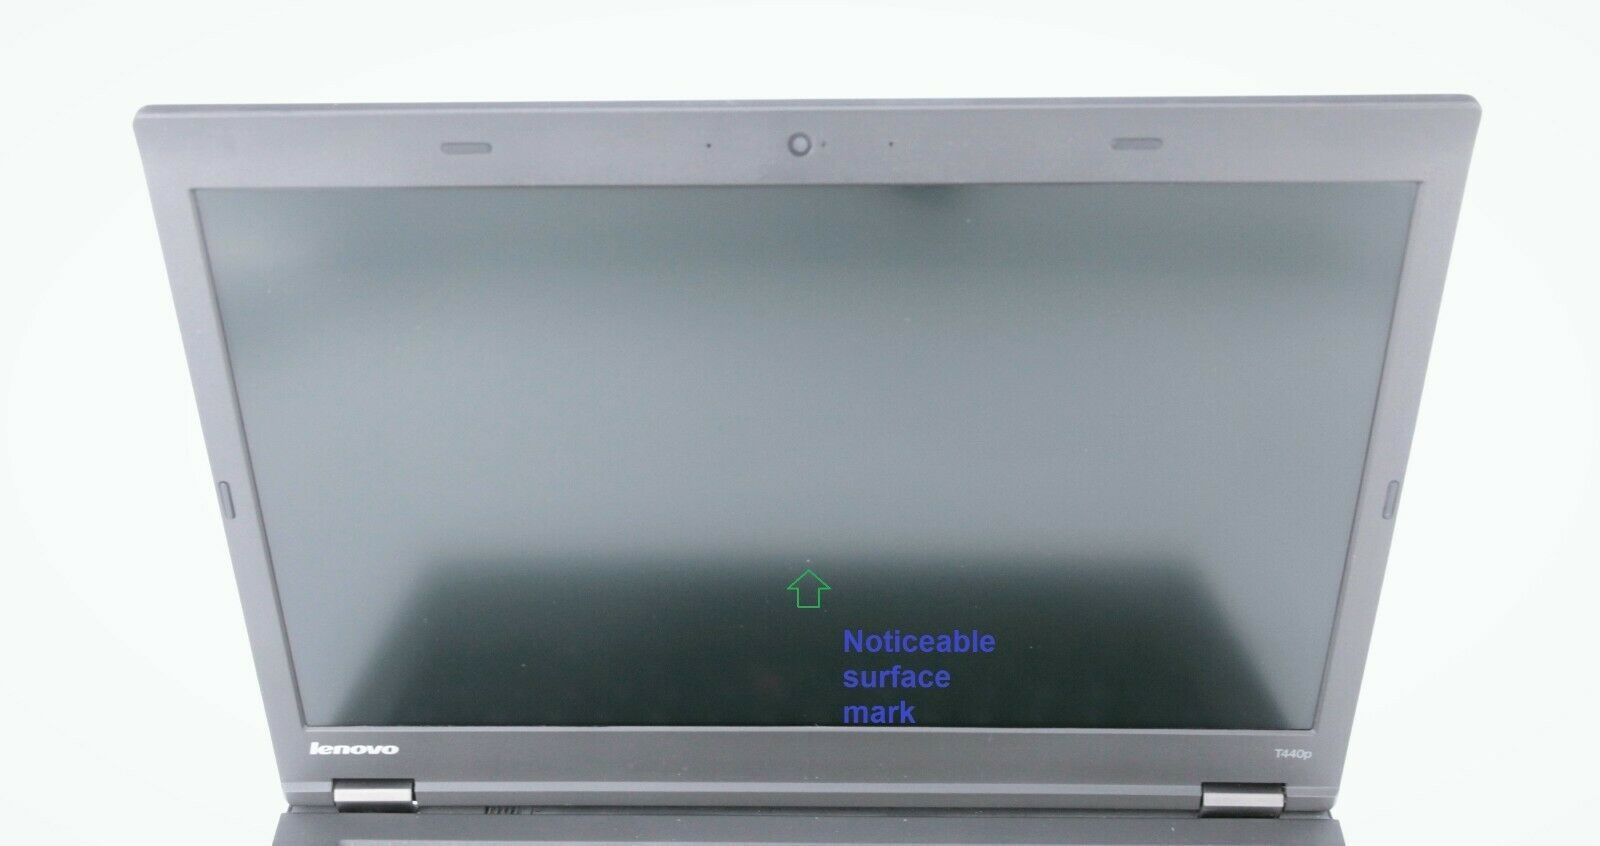 Lenovo ThinkPad T440P Laptop: Core i7-4600M, 8GB, 240GB SSD, NVIDIA 730M, VAT - CruiseTech